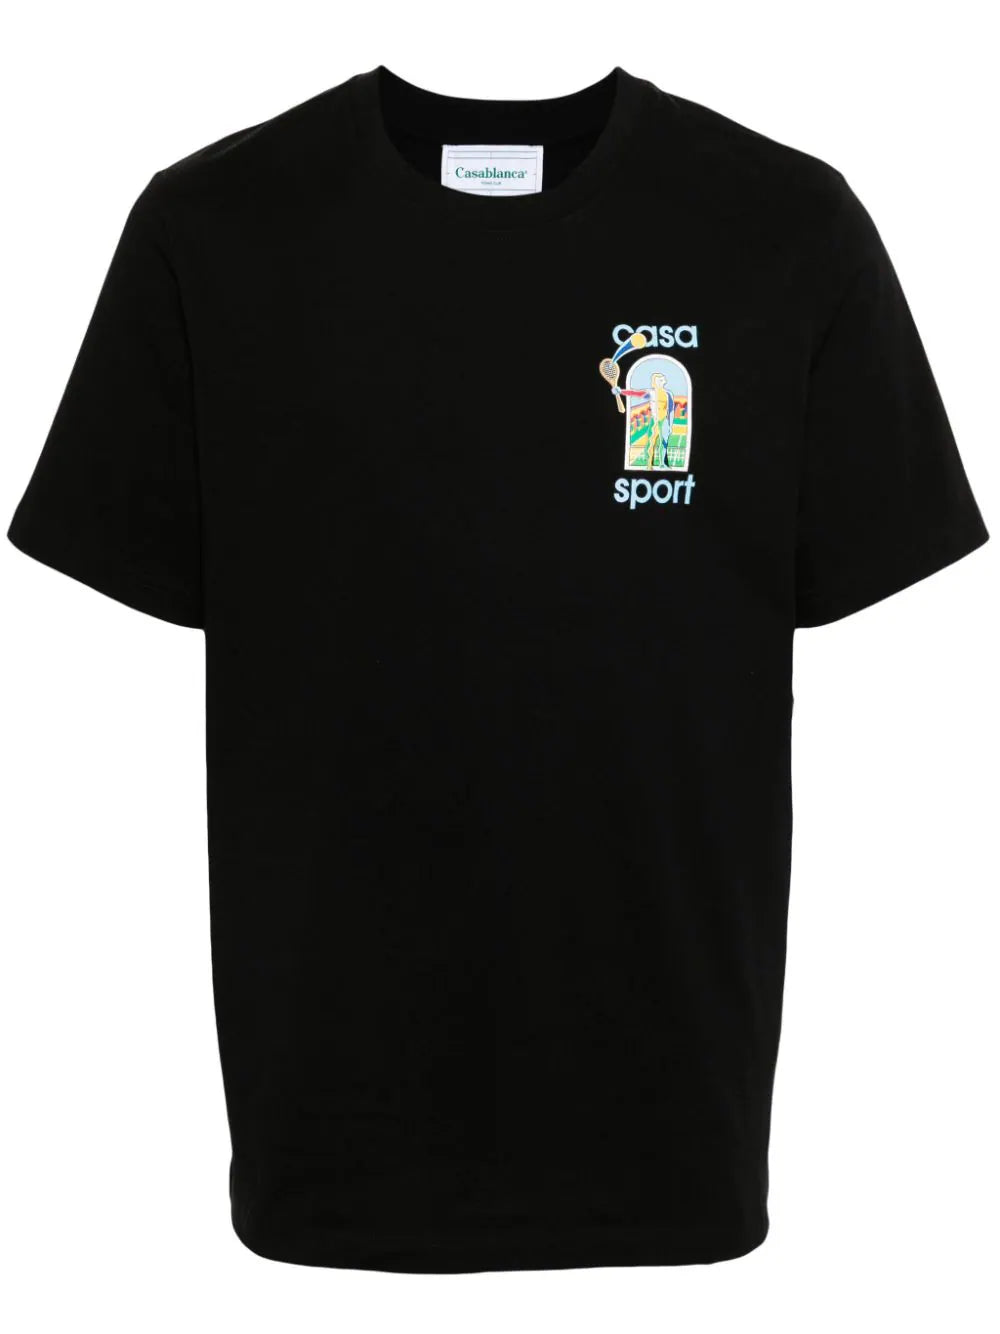 Casablanca Le Jeu Colore Printed T-Shirt in Black